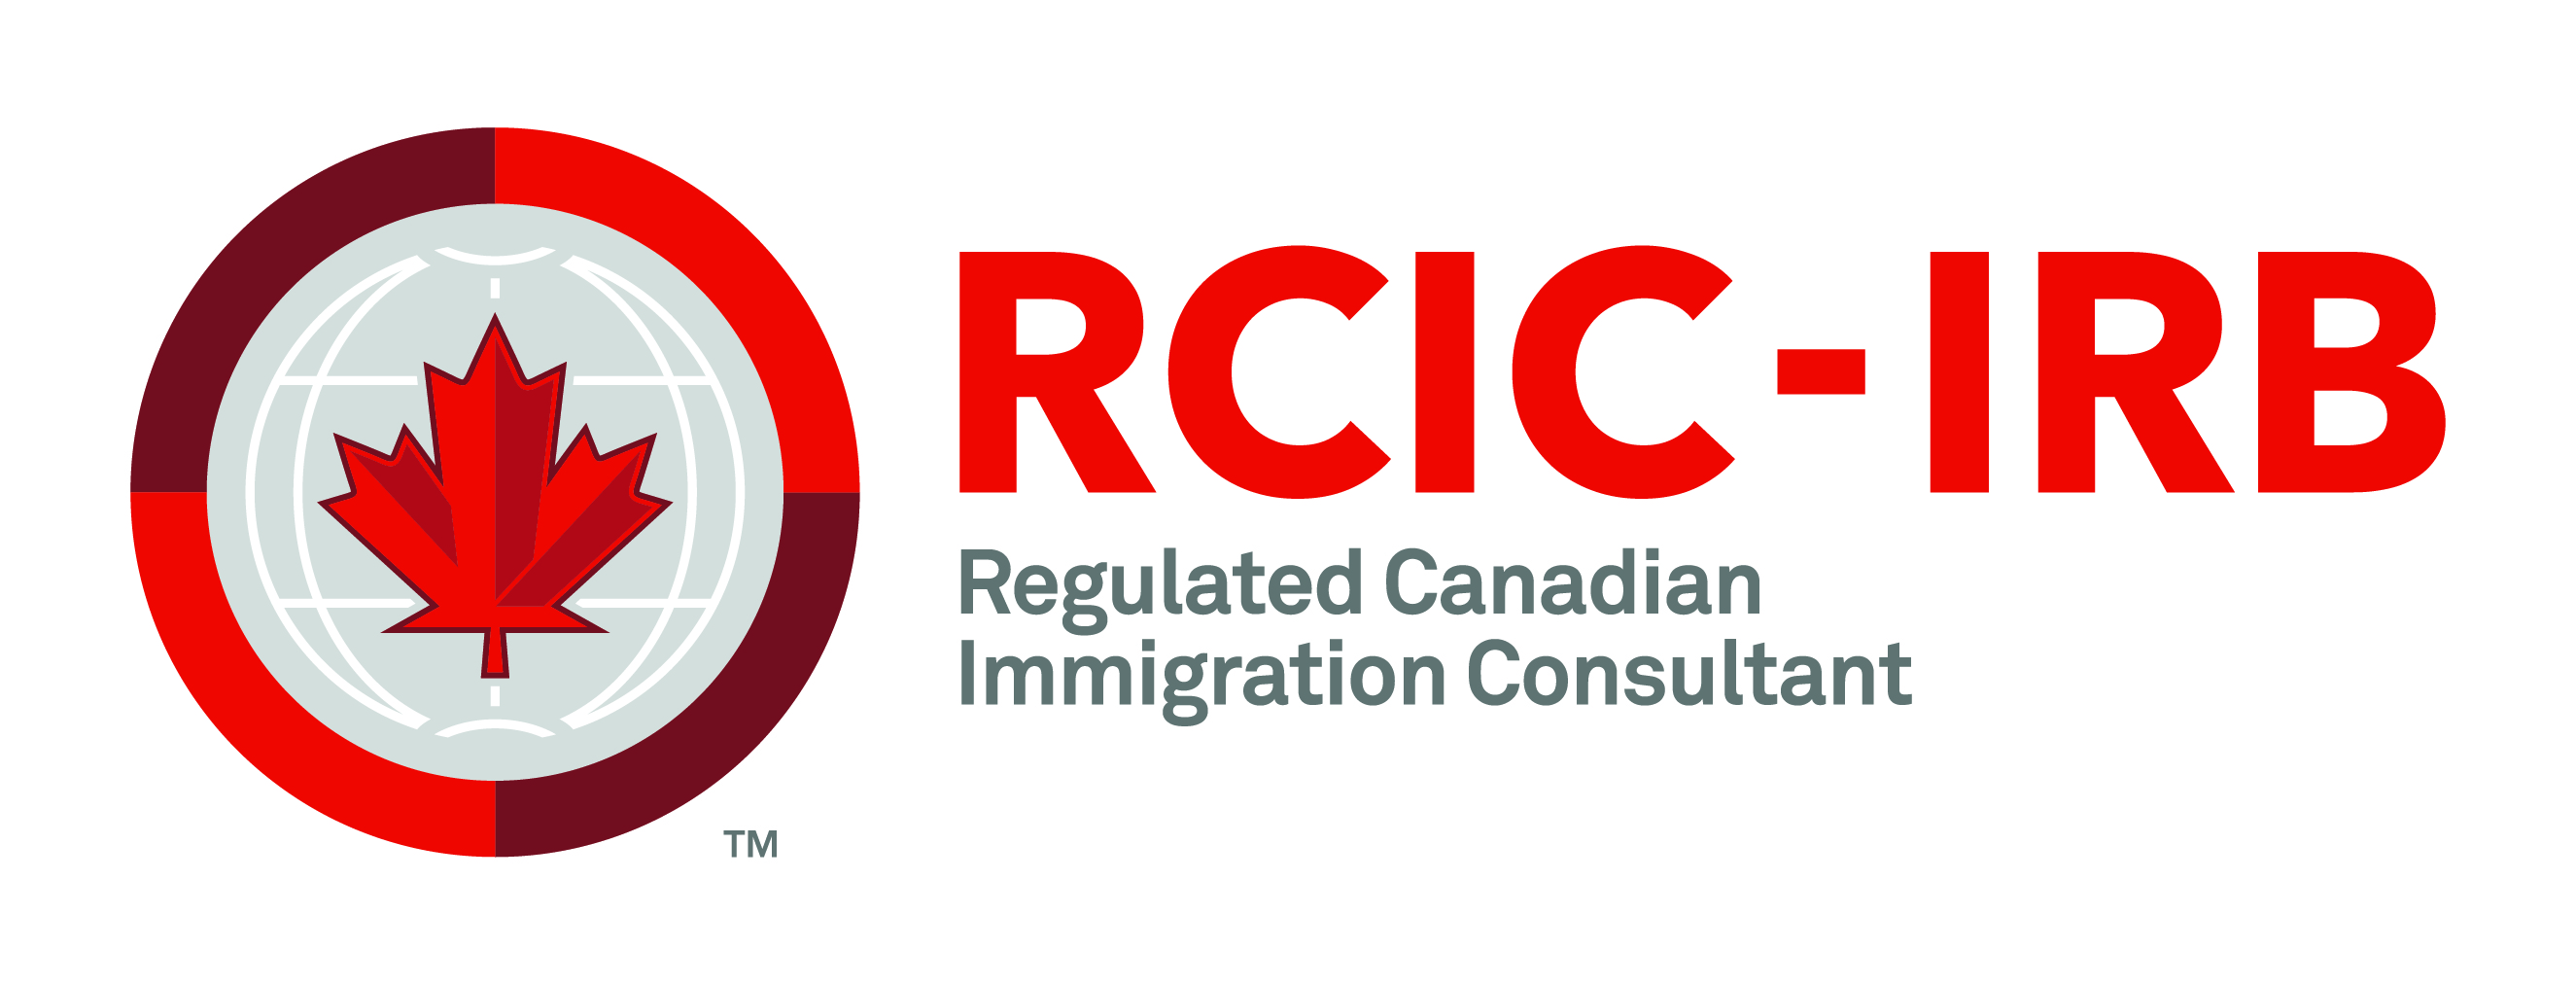 Why Use an RCIC?